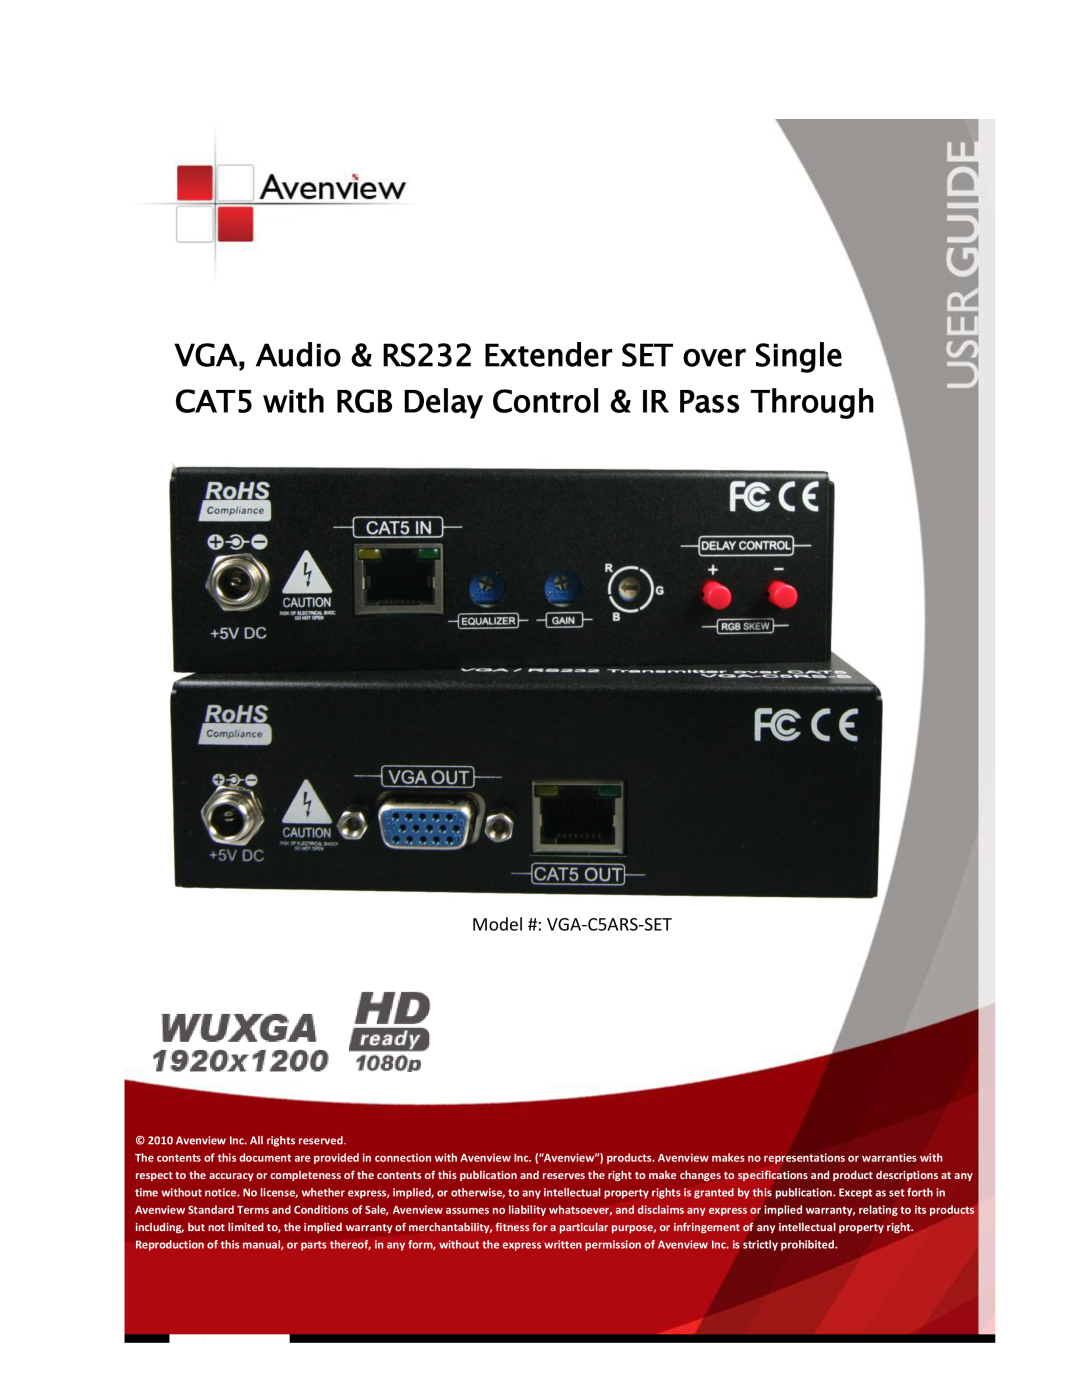 Avenview VR 2000 specifications Model # VGA-C5ARS-SET 